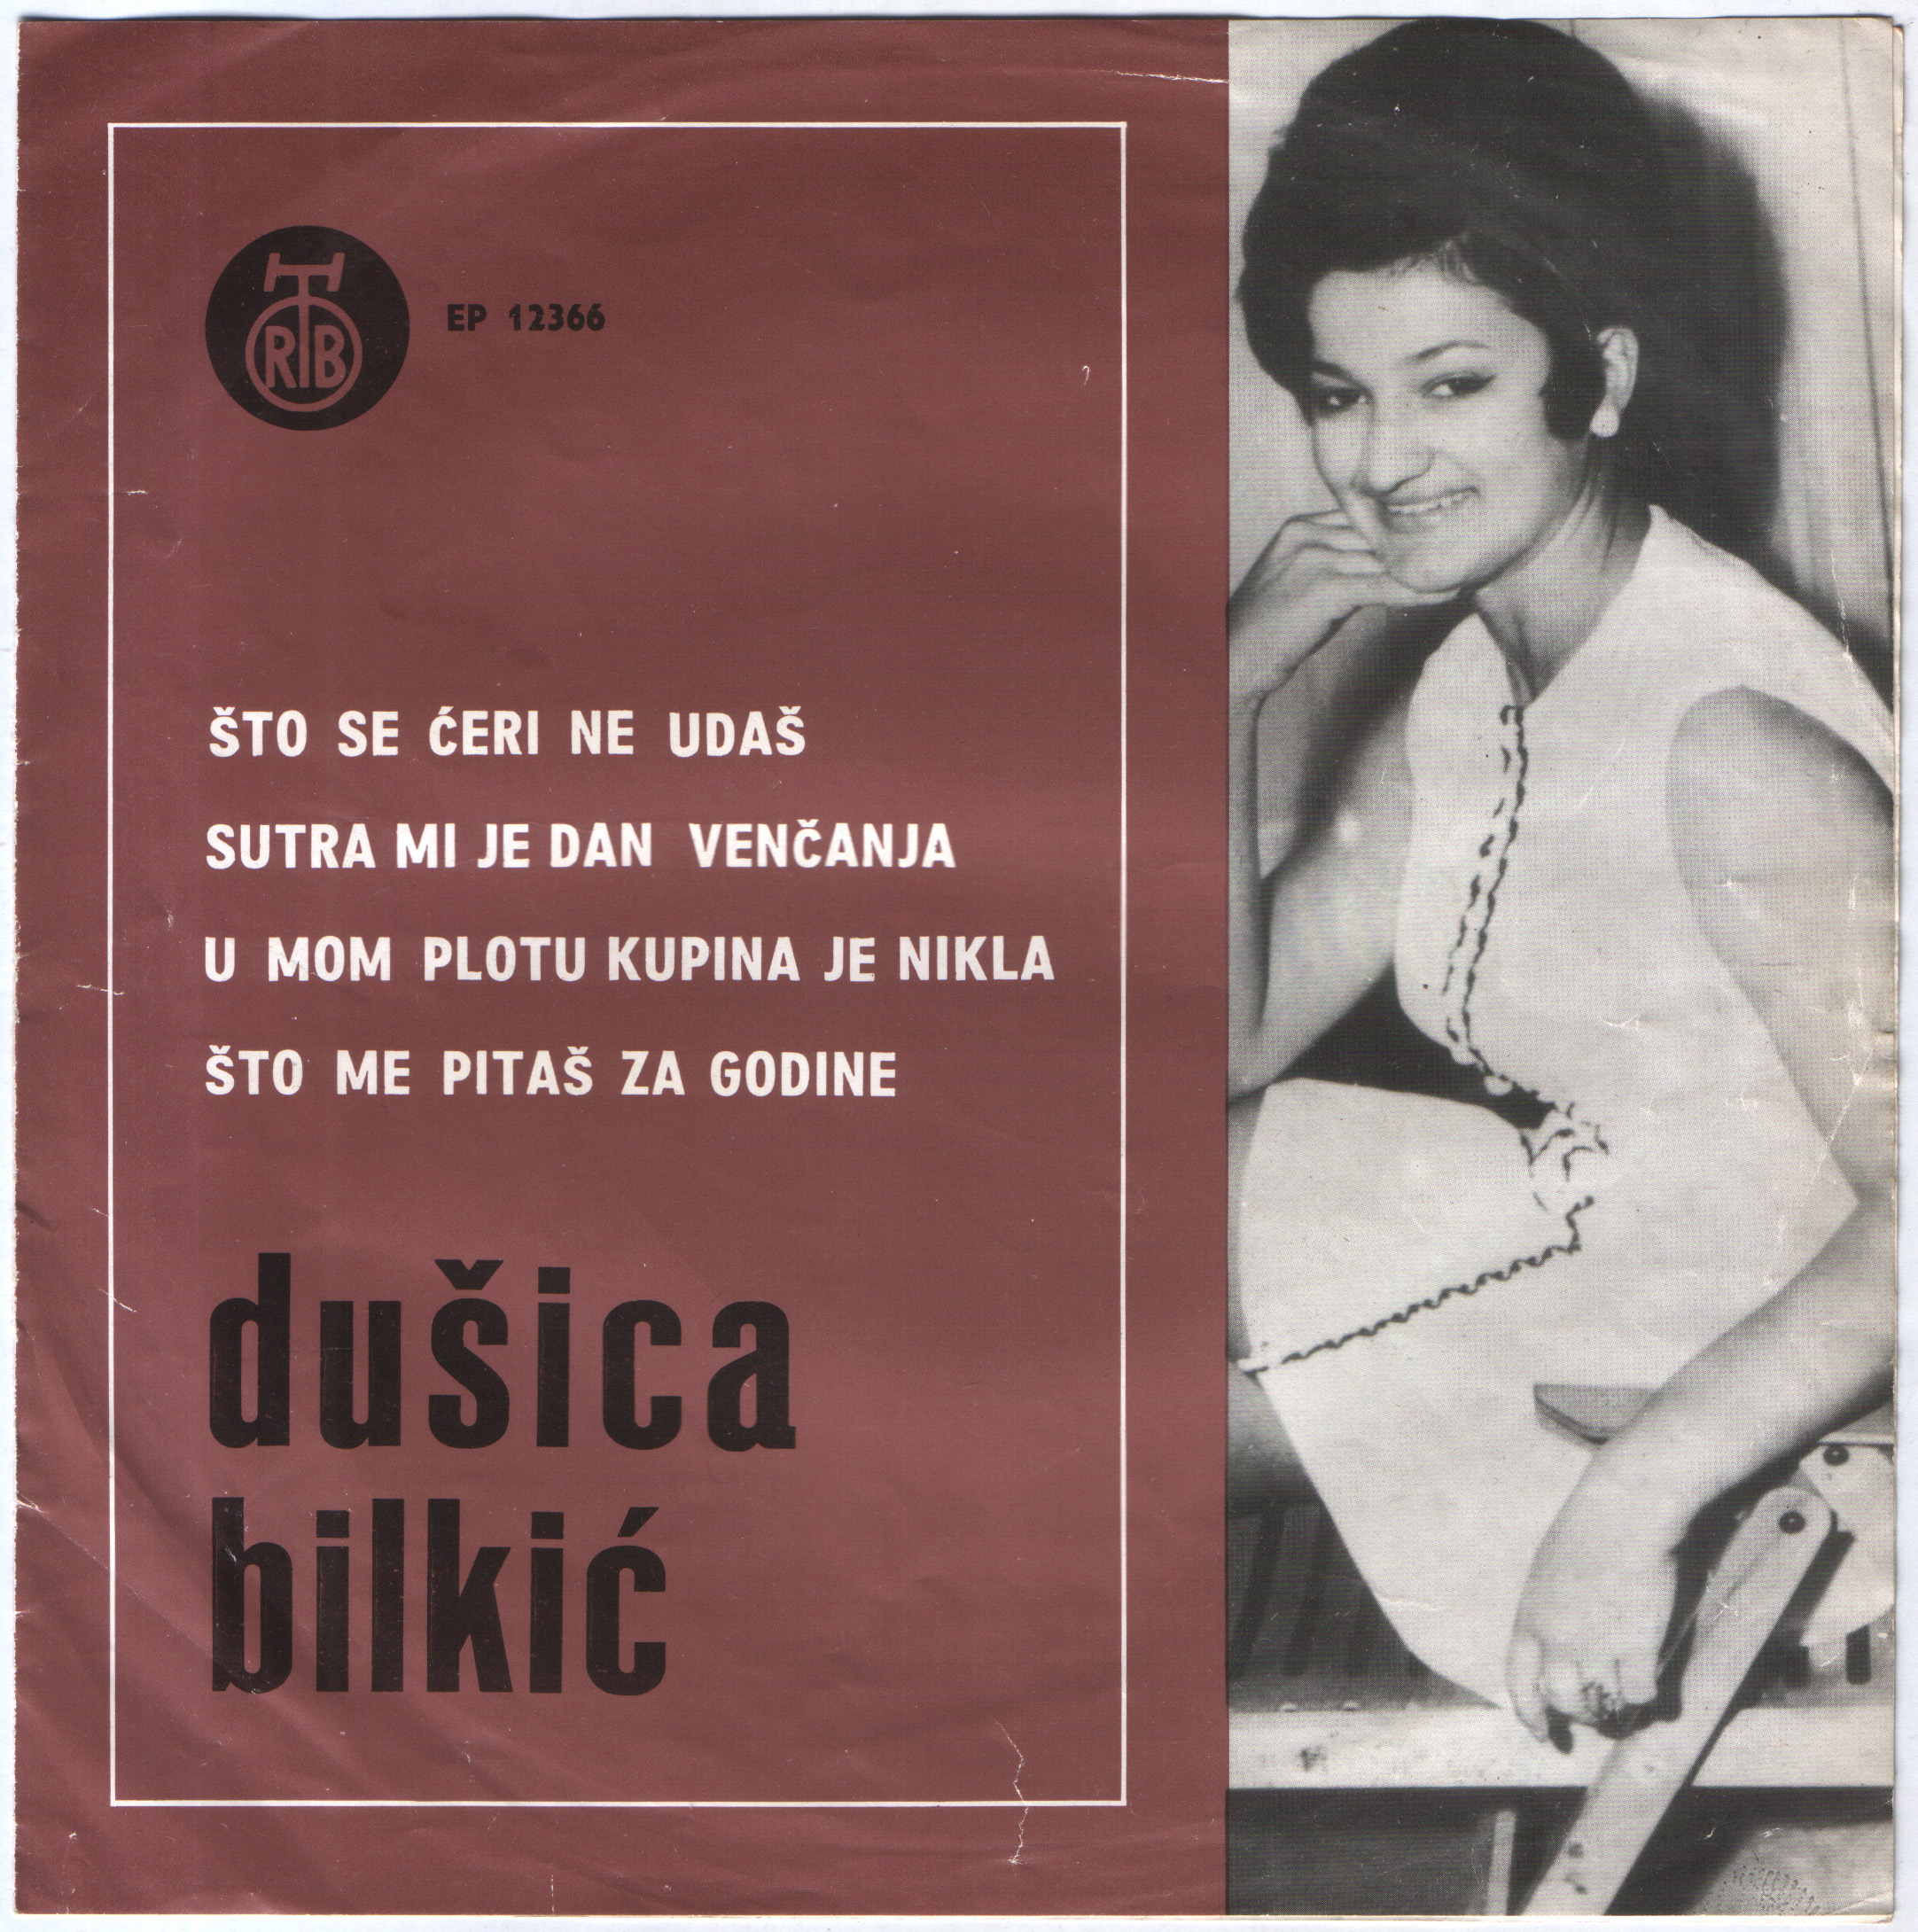 Dusica Bilkic 1969 PS